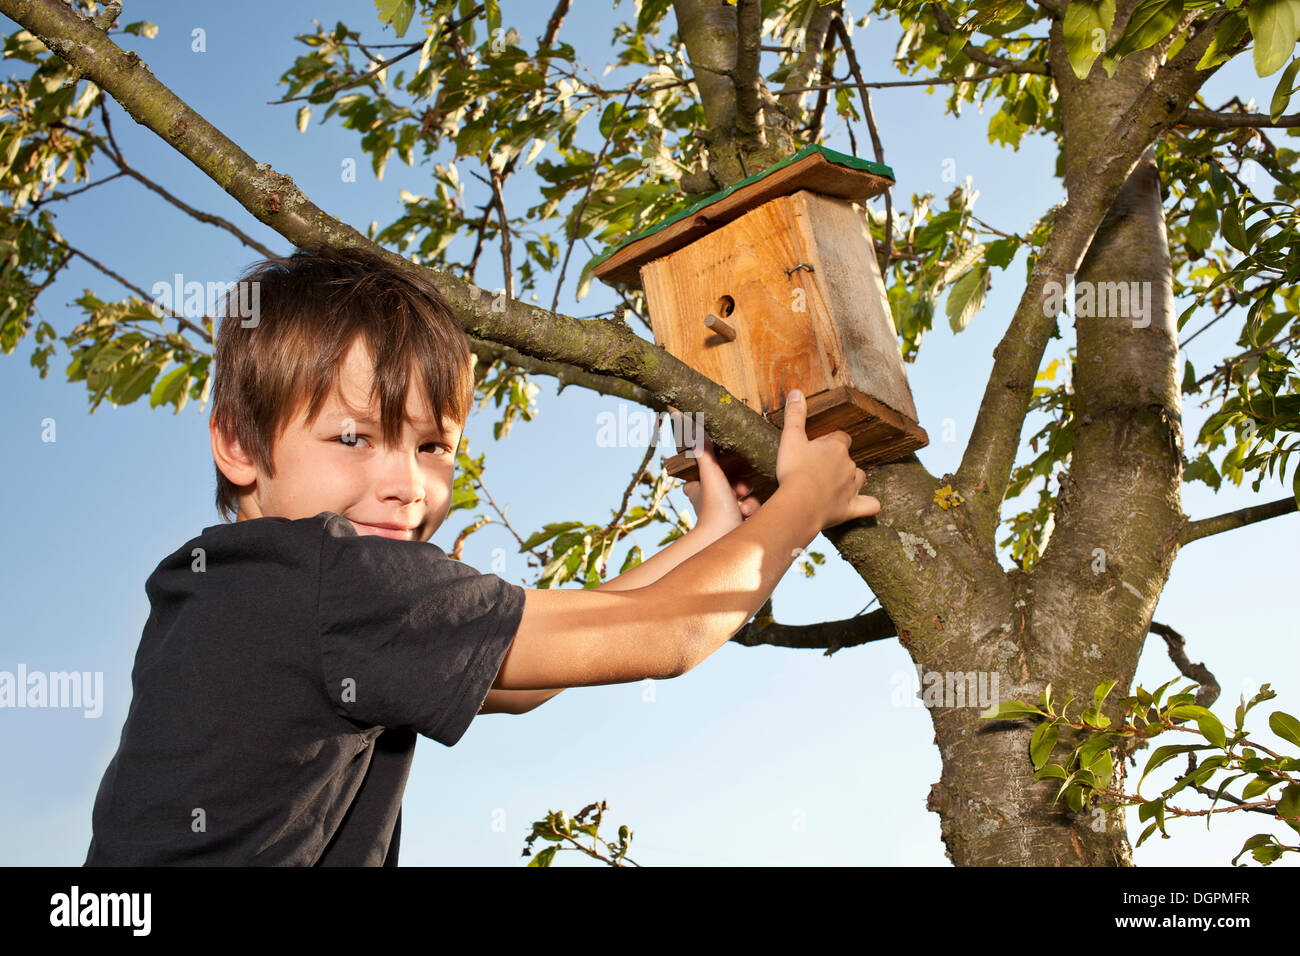 Boy putting a nesting box on a tree Stock Photo